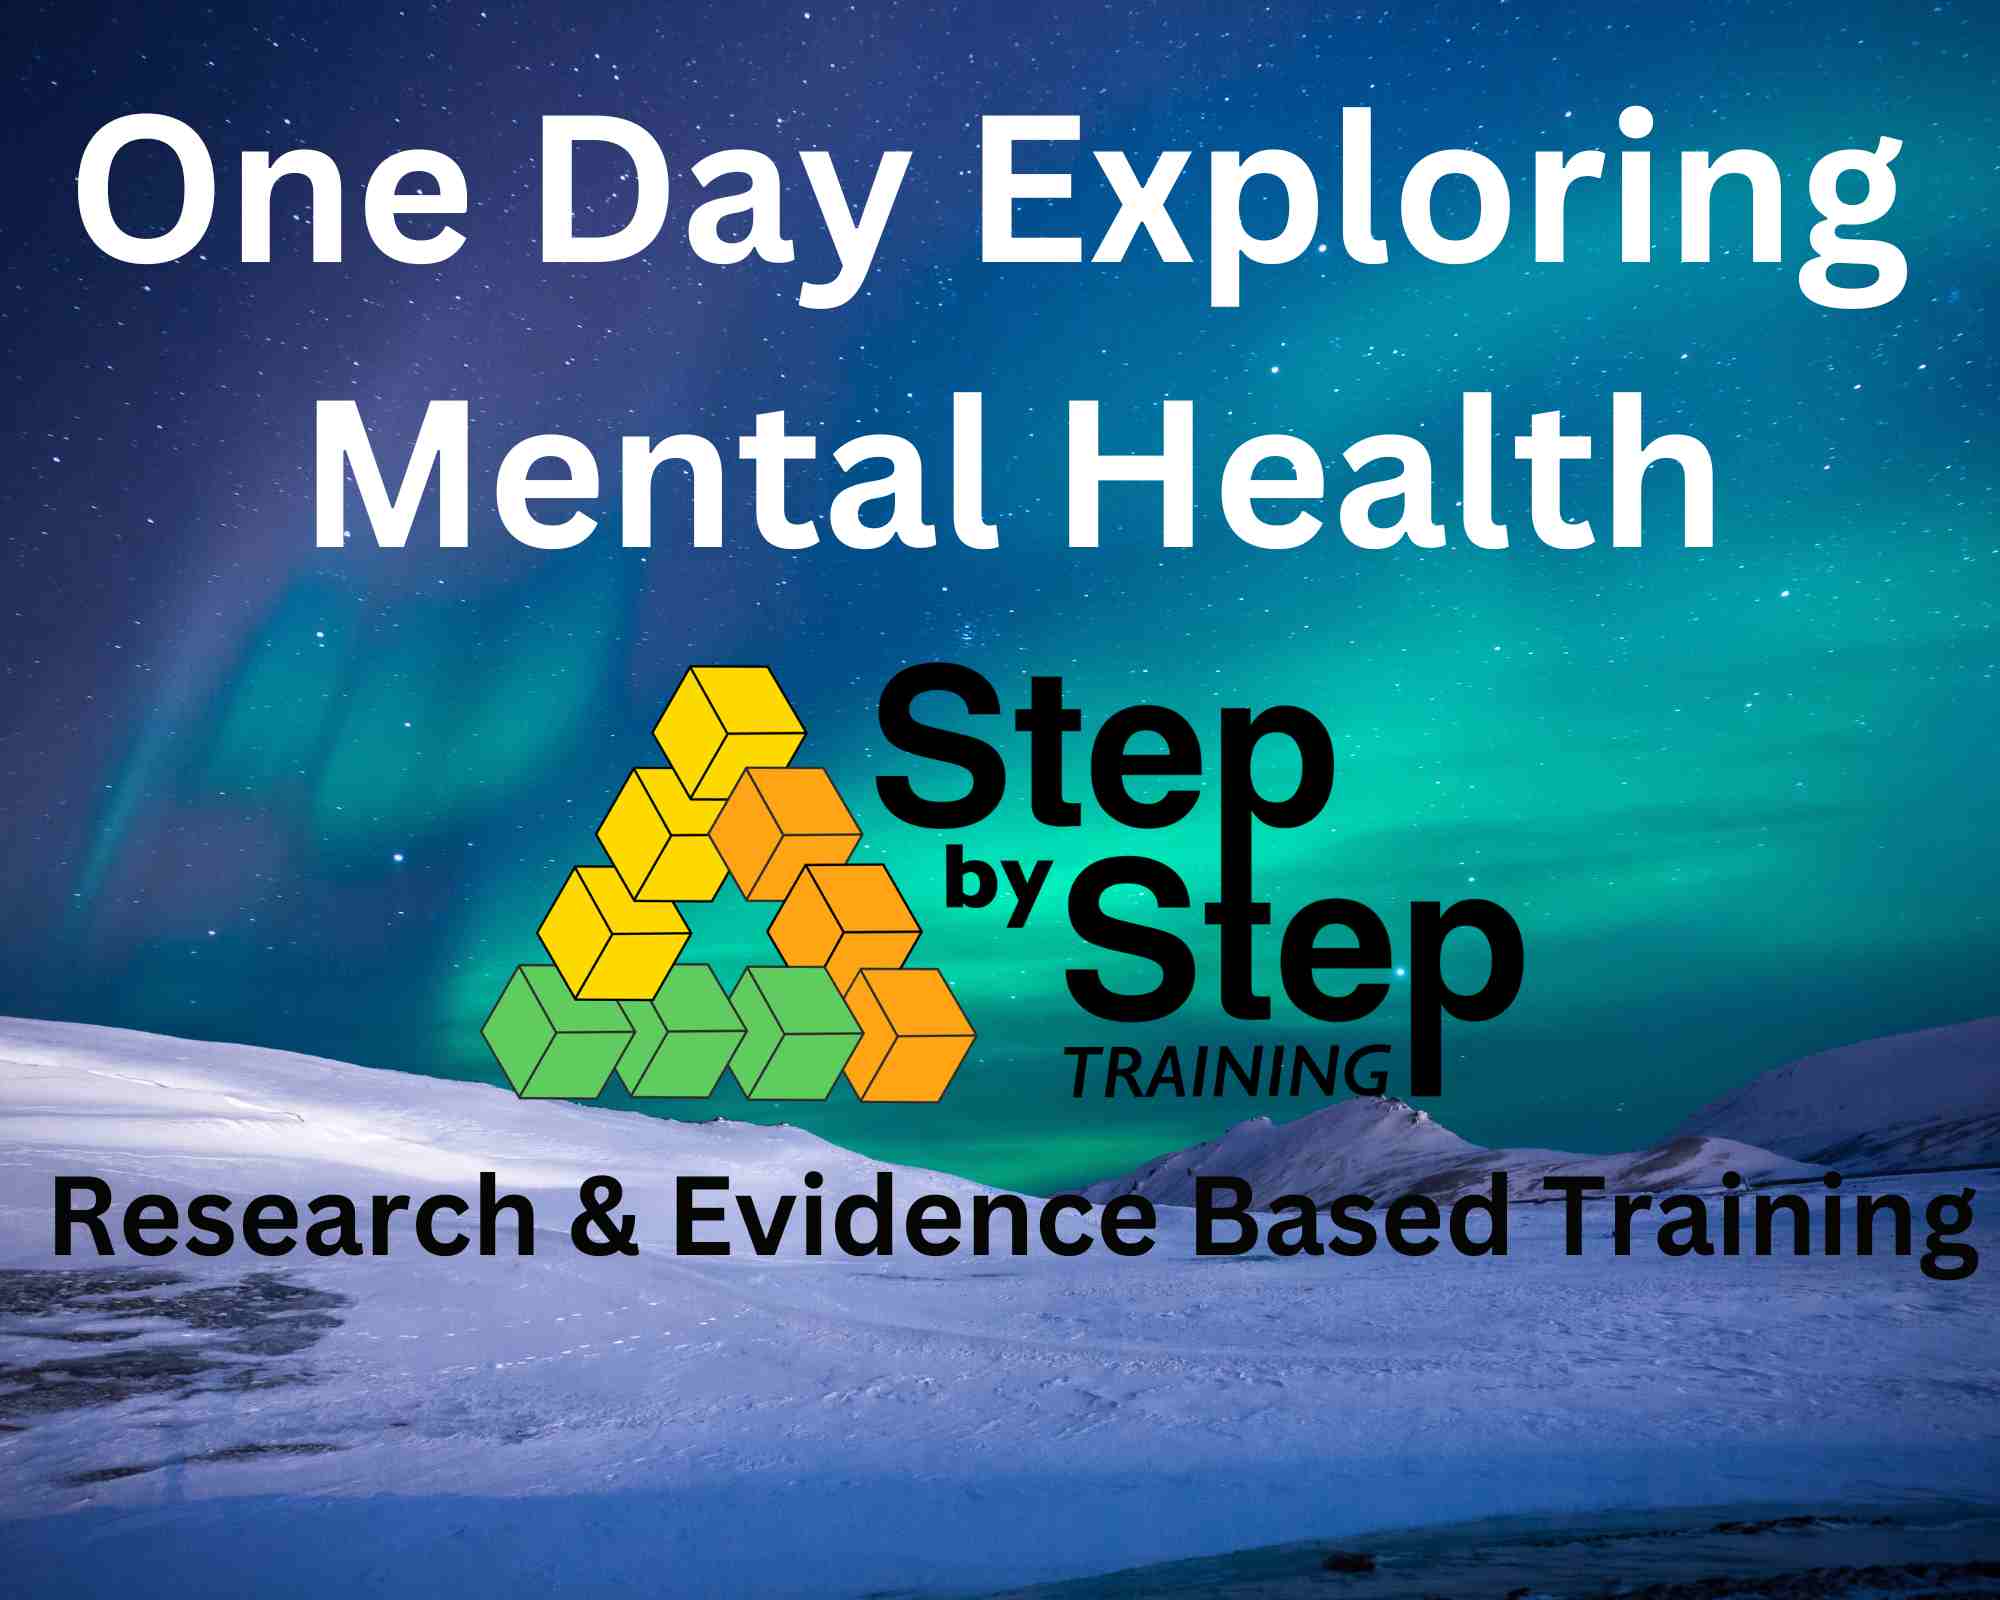 One day mental health training